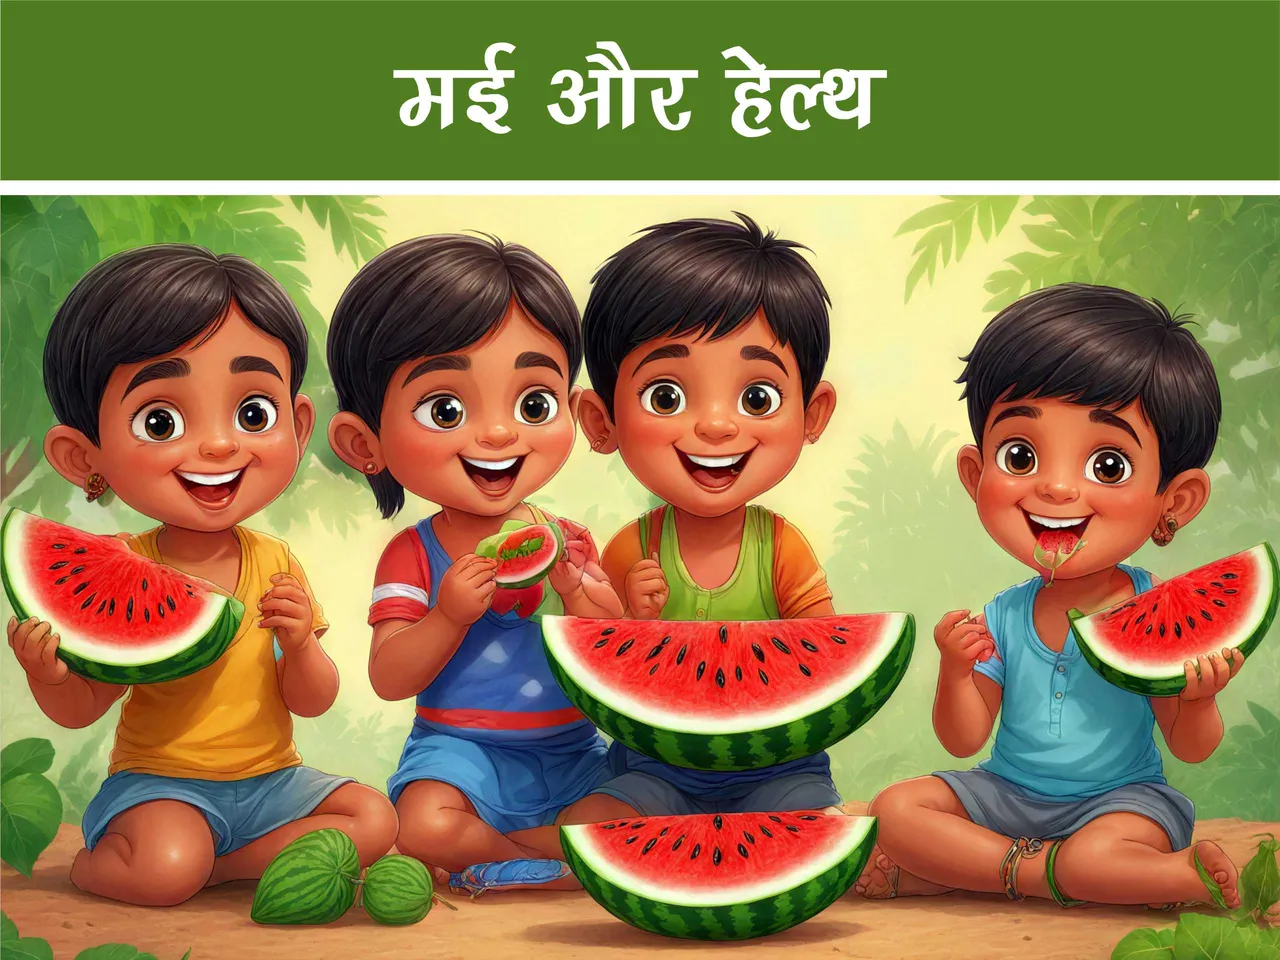 Cartoon image of kids eating watermelon